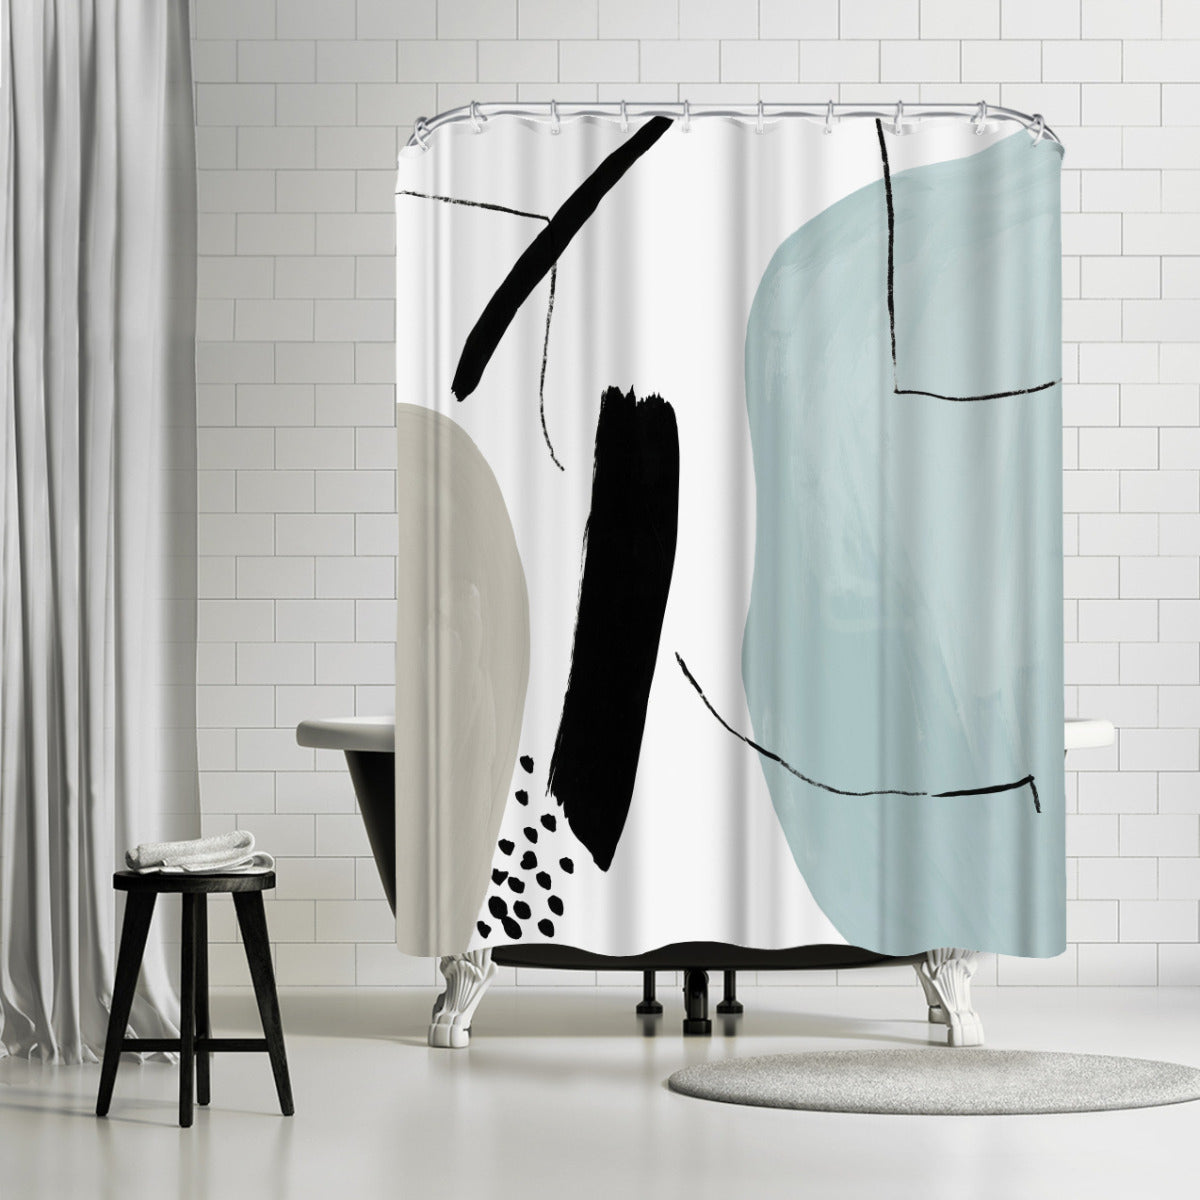 Integral Ii by Pi Creative Art - Shower Curtain